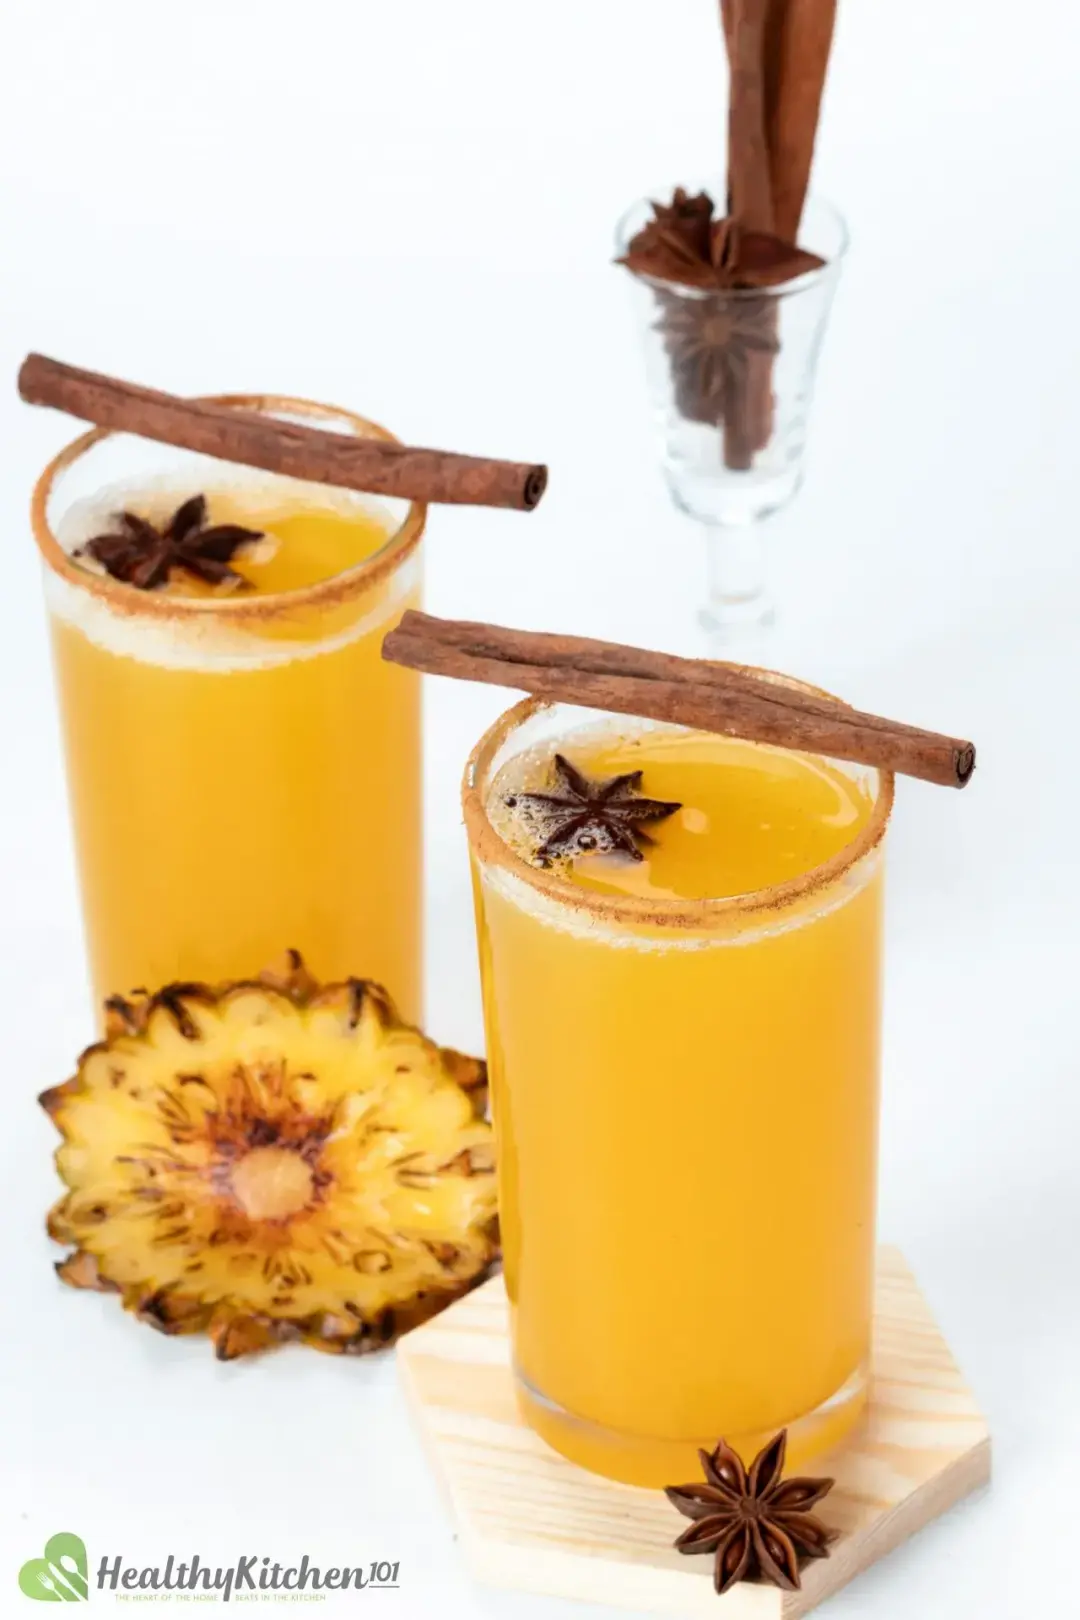 Calories in Rum and Pineapple Juice